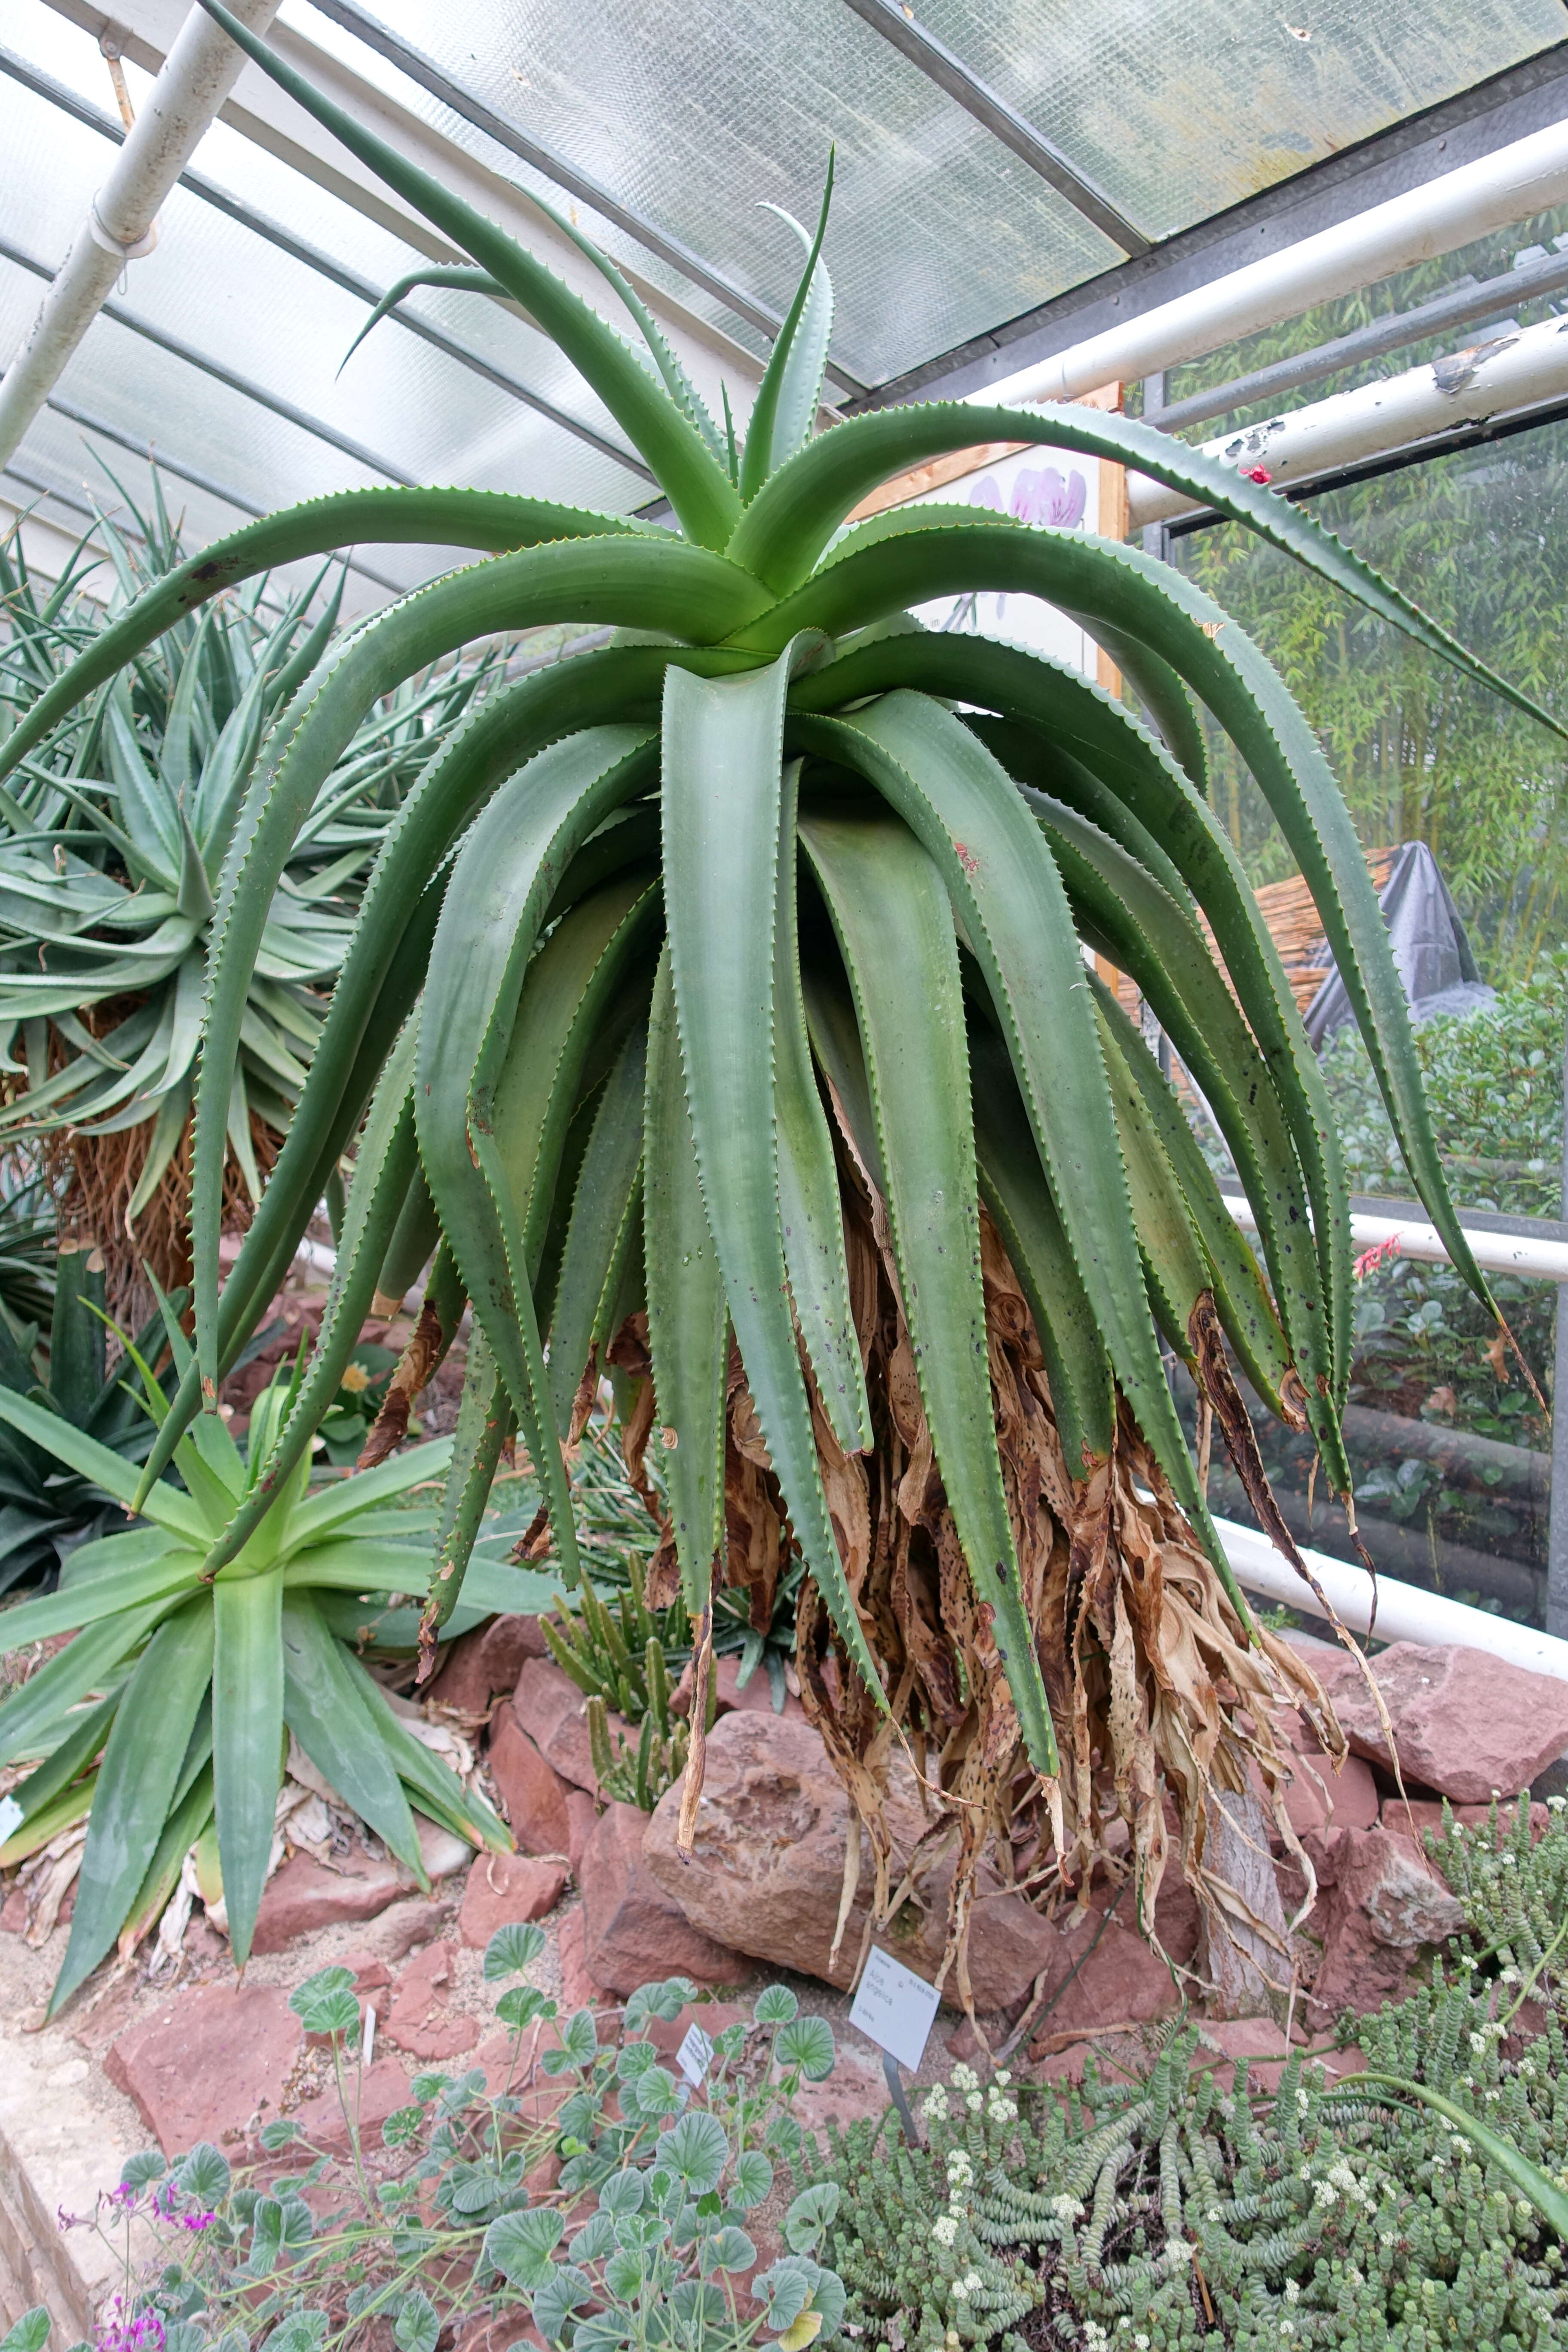 Image of Wylliespoort Aloe